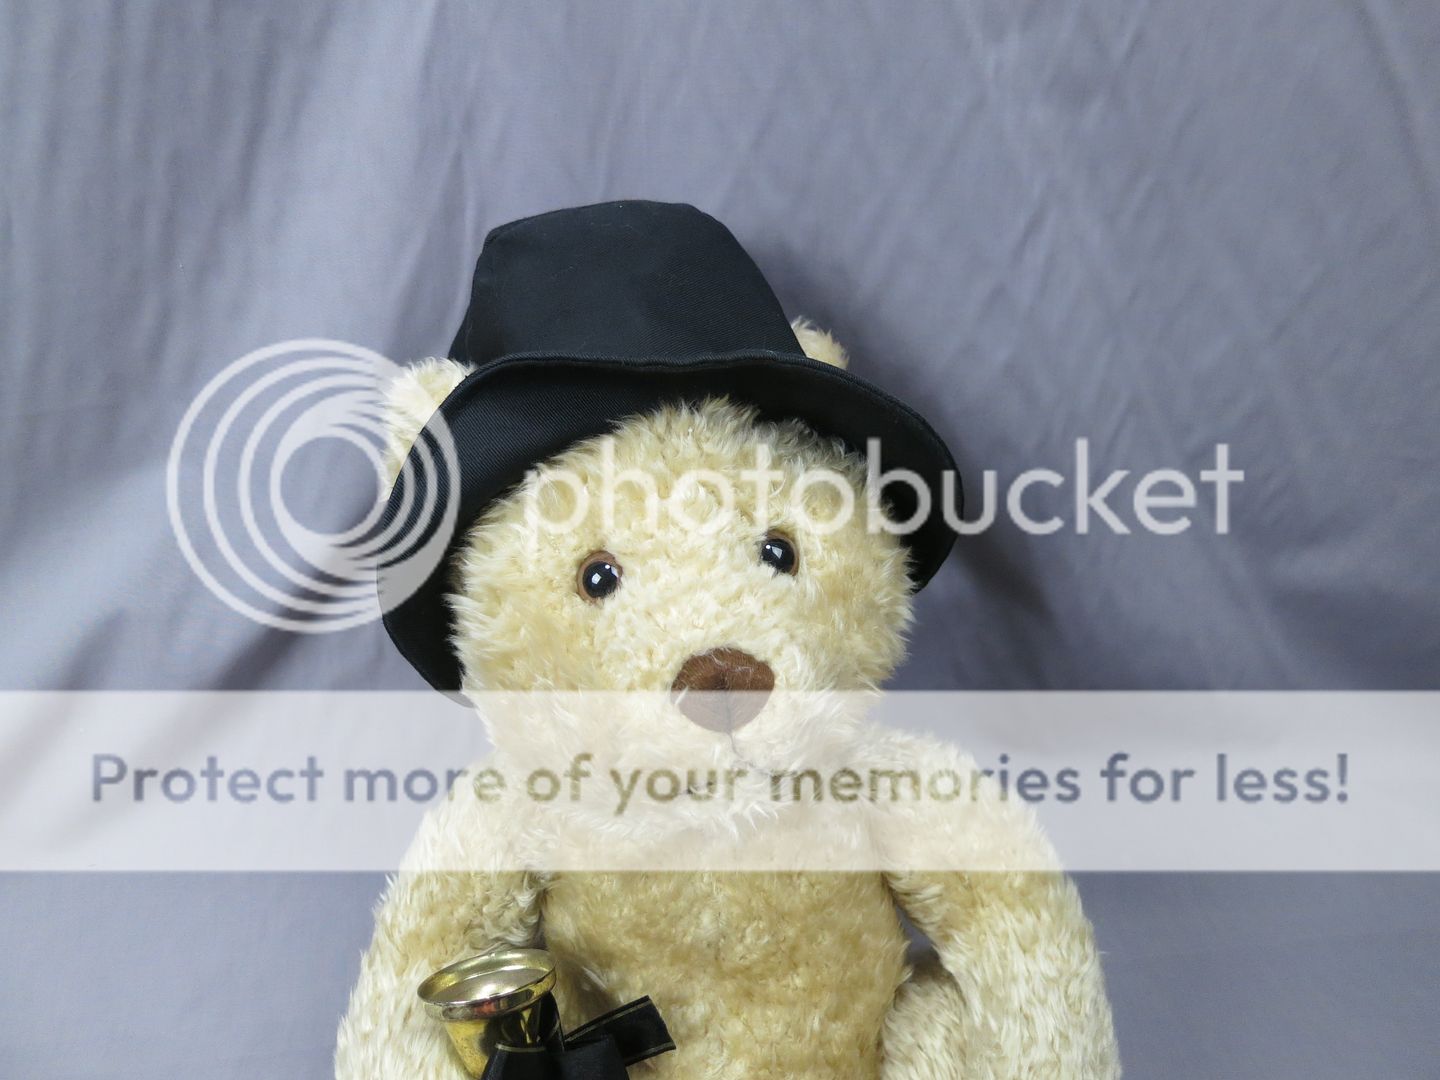 teddy bear top hat